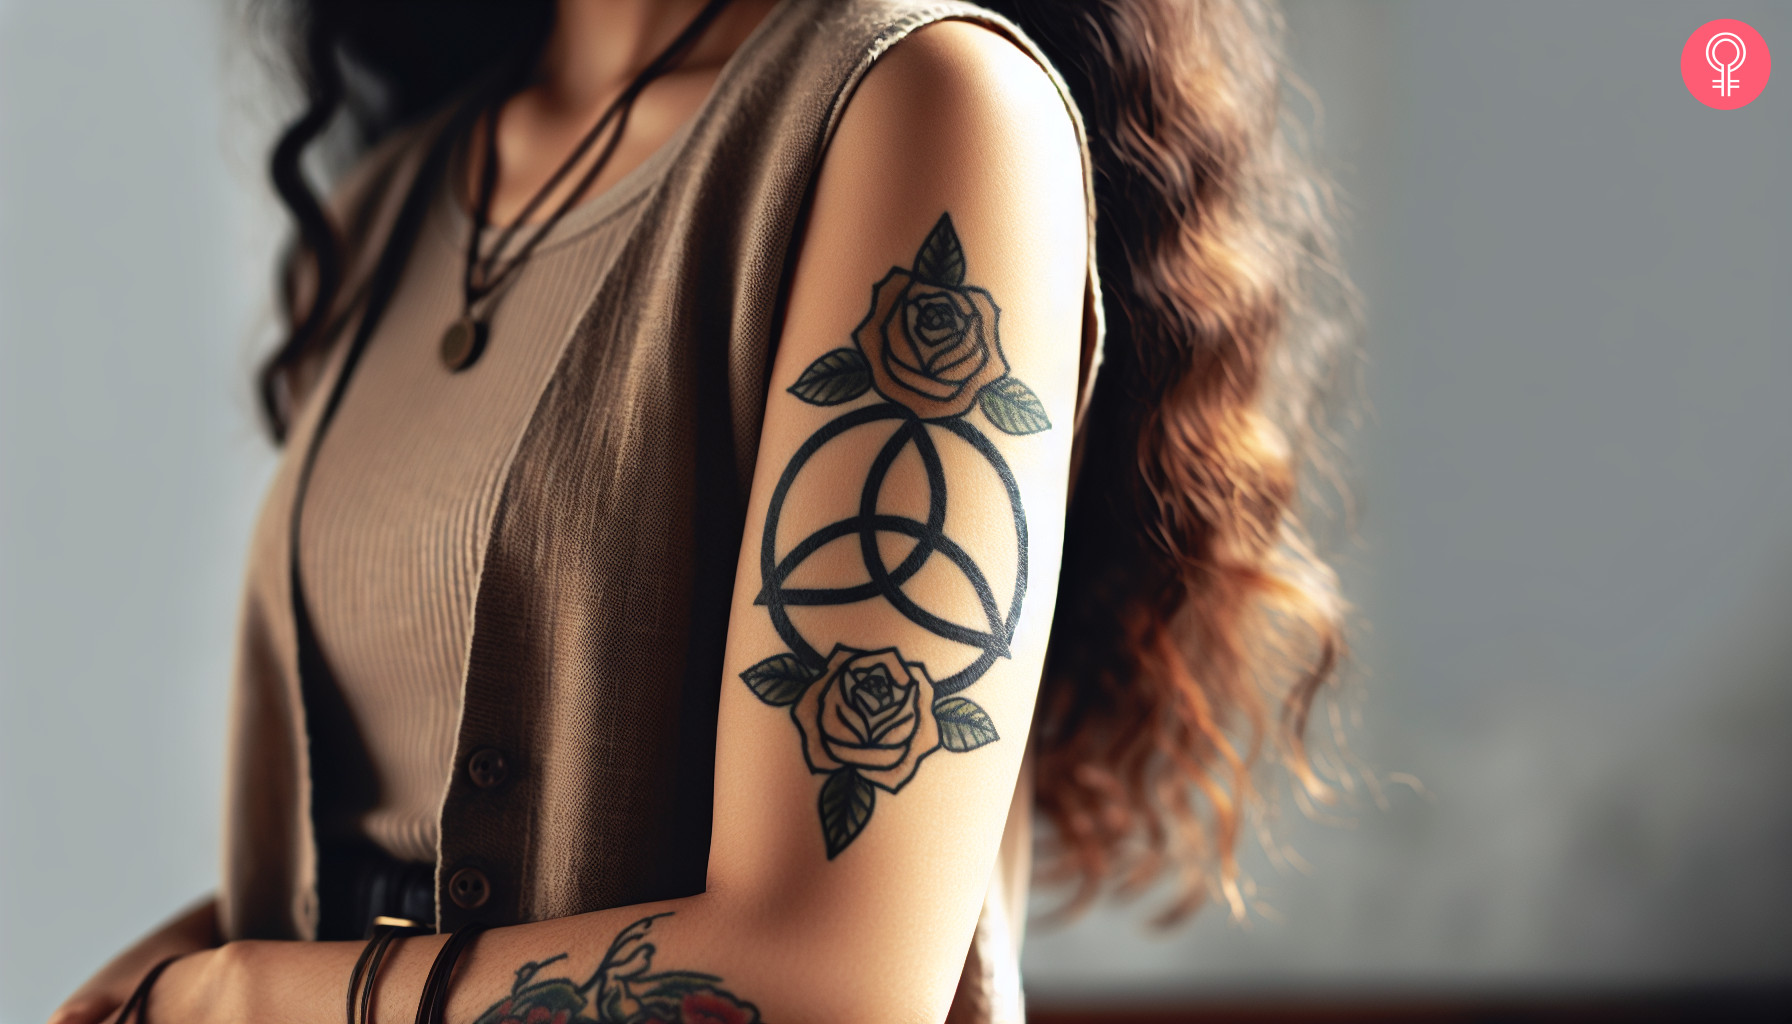 Feminine trinity knot tattoo on the upper arm of a woman